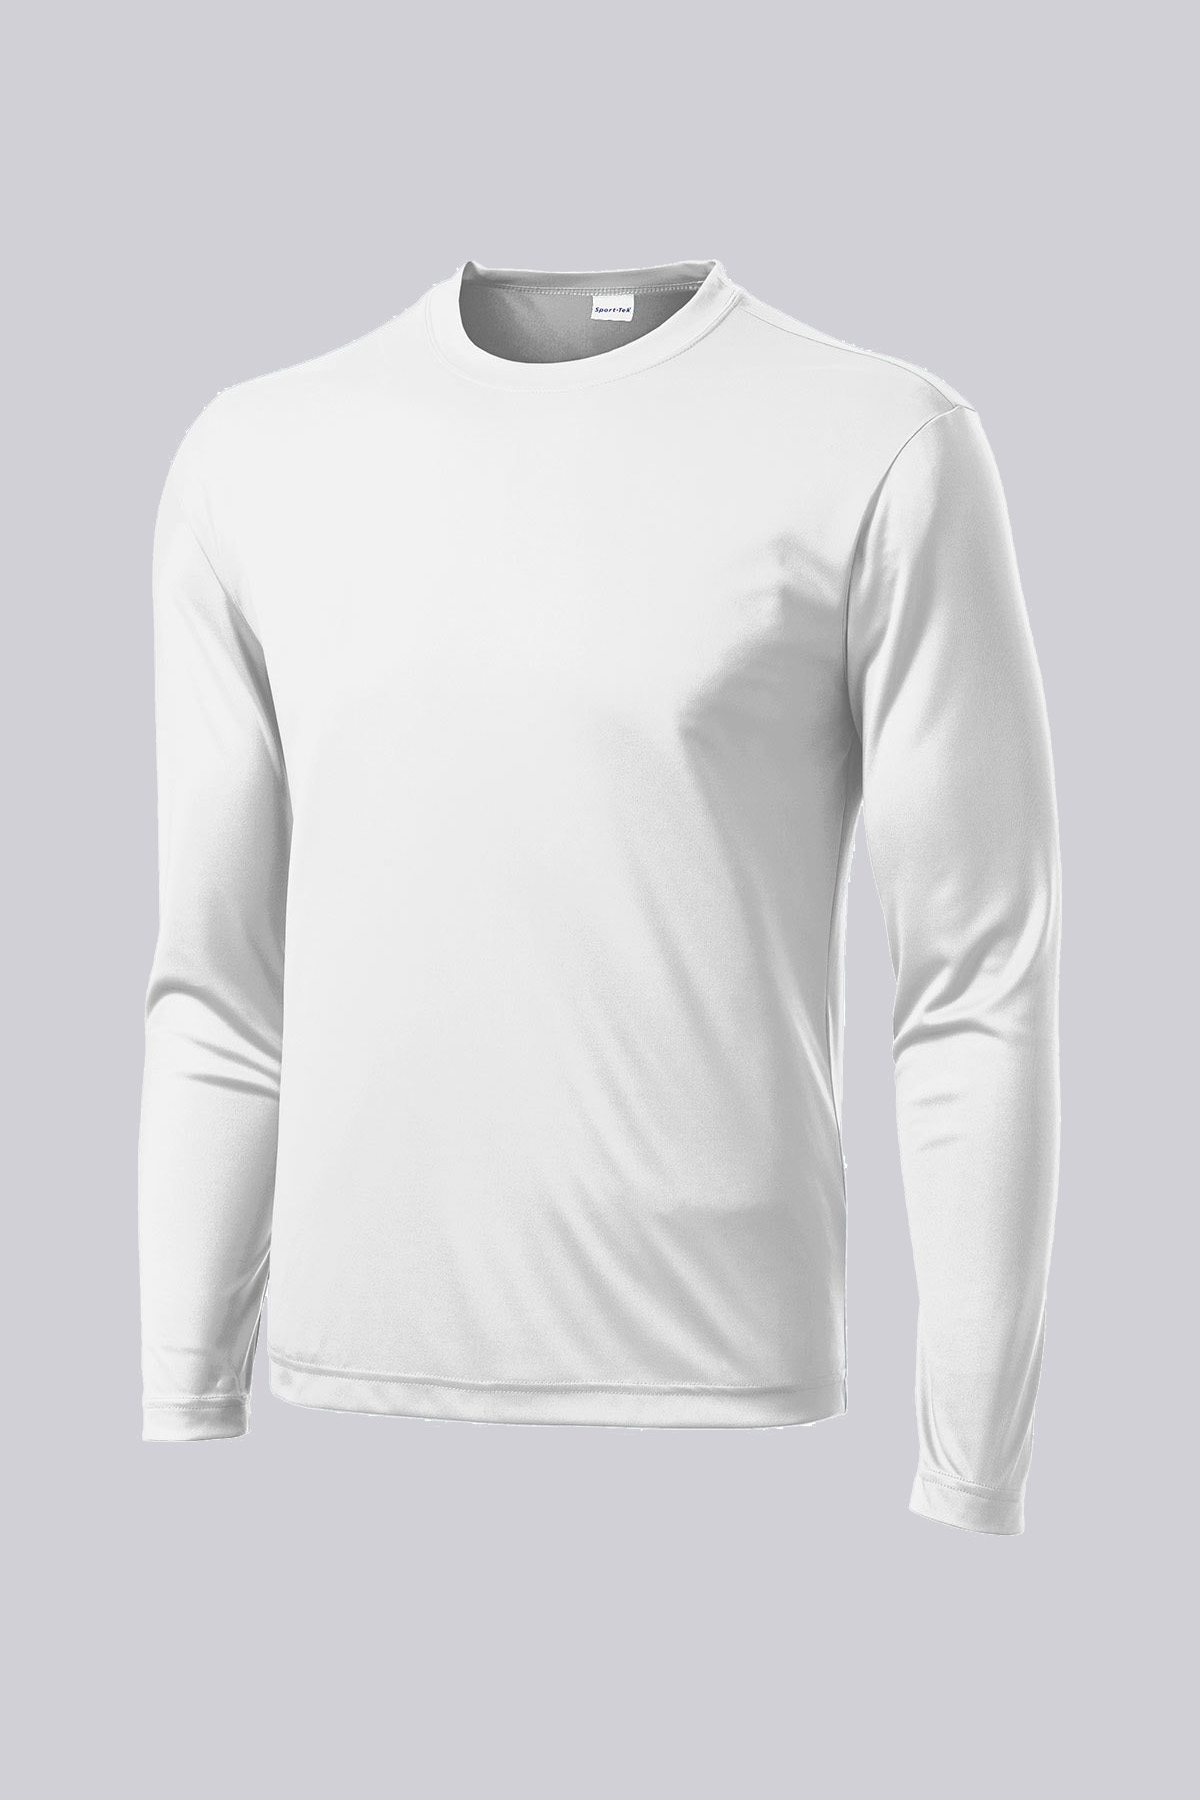 https://www.liquidyachtwear.com/wp-content/uploads/2022/08/sport-tek-mens-long-sleeve-posicharge-competitor-tee-white-front-Copy.jpg